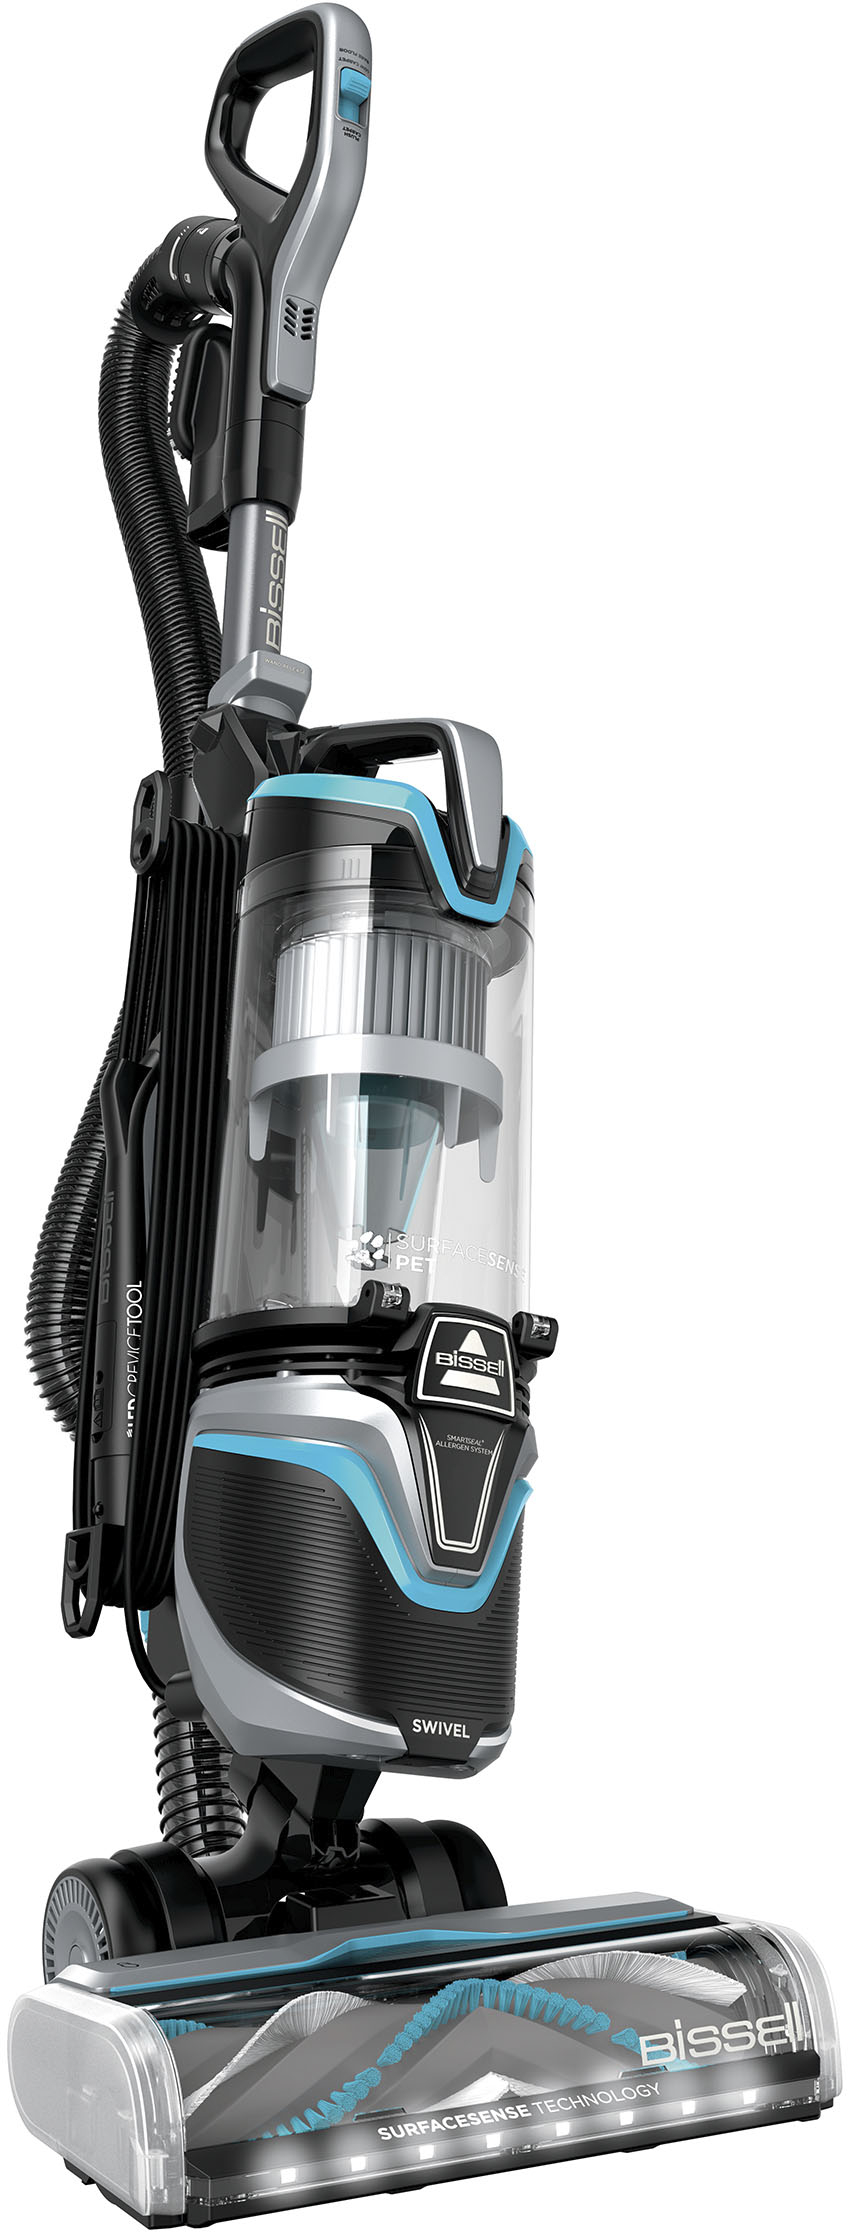 Angle View: LG - CordZero Cordless Stick Vacuum with Auto Empty and Kompressor - Sand Beige